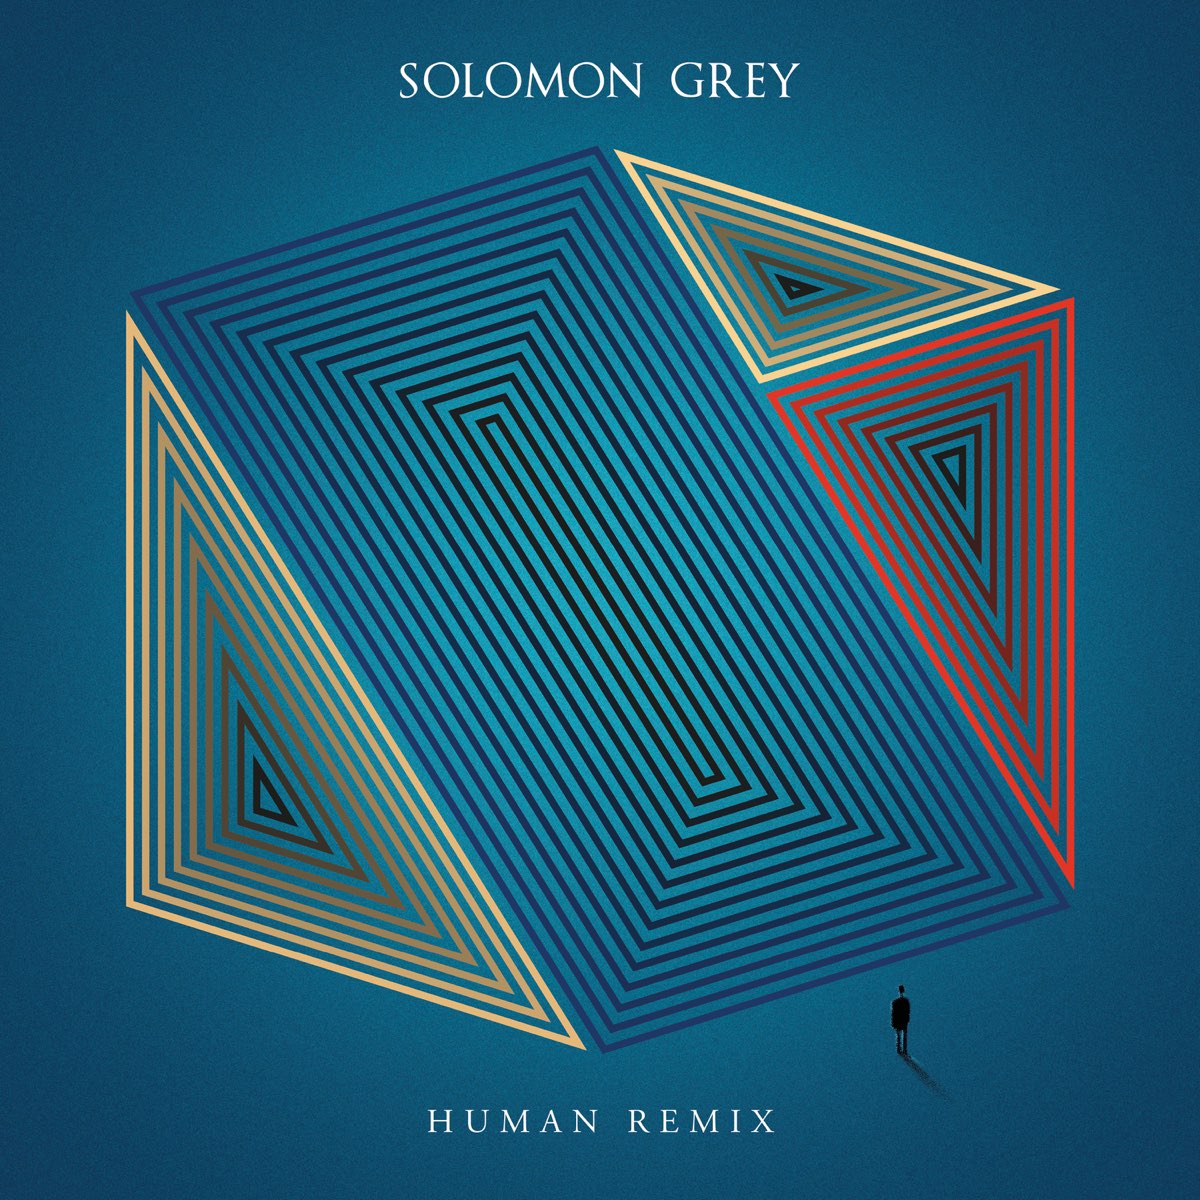 Solomon Grey. Alex Somers пластинки. Solomon Grey фото. Dusky feat. Solomon Grey - long wait (Radio Edit). Human remix